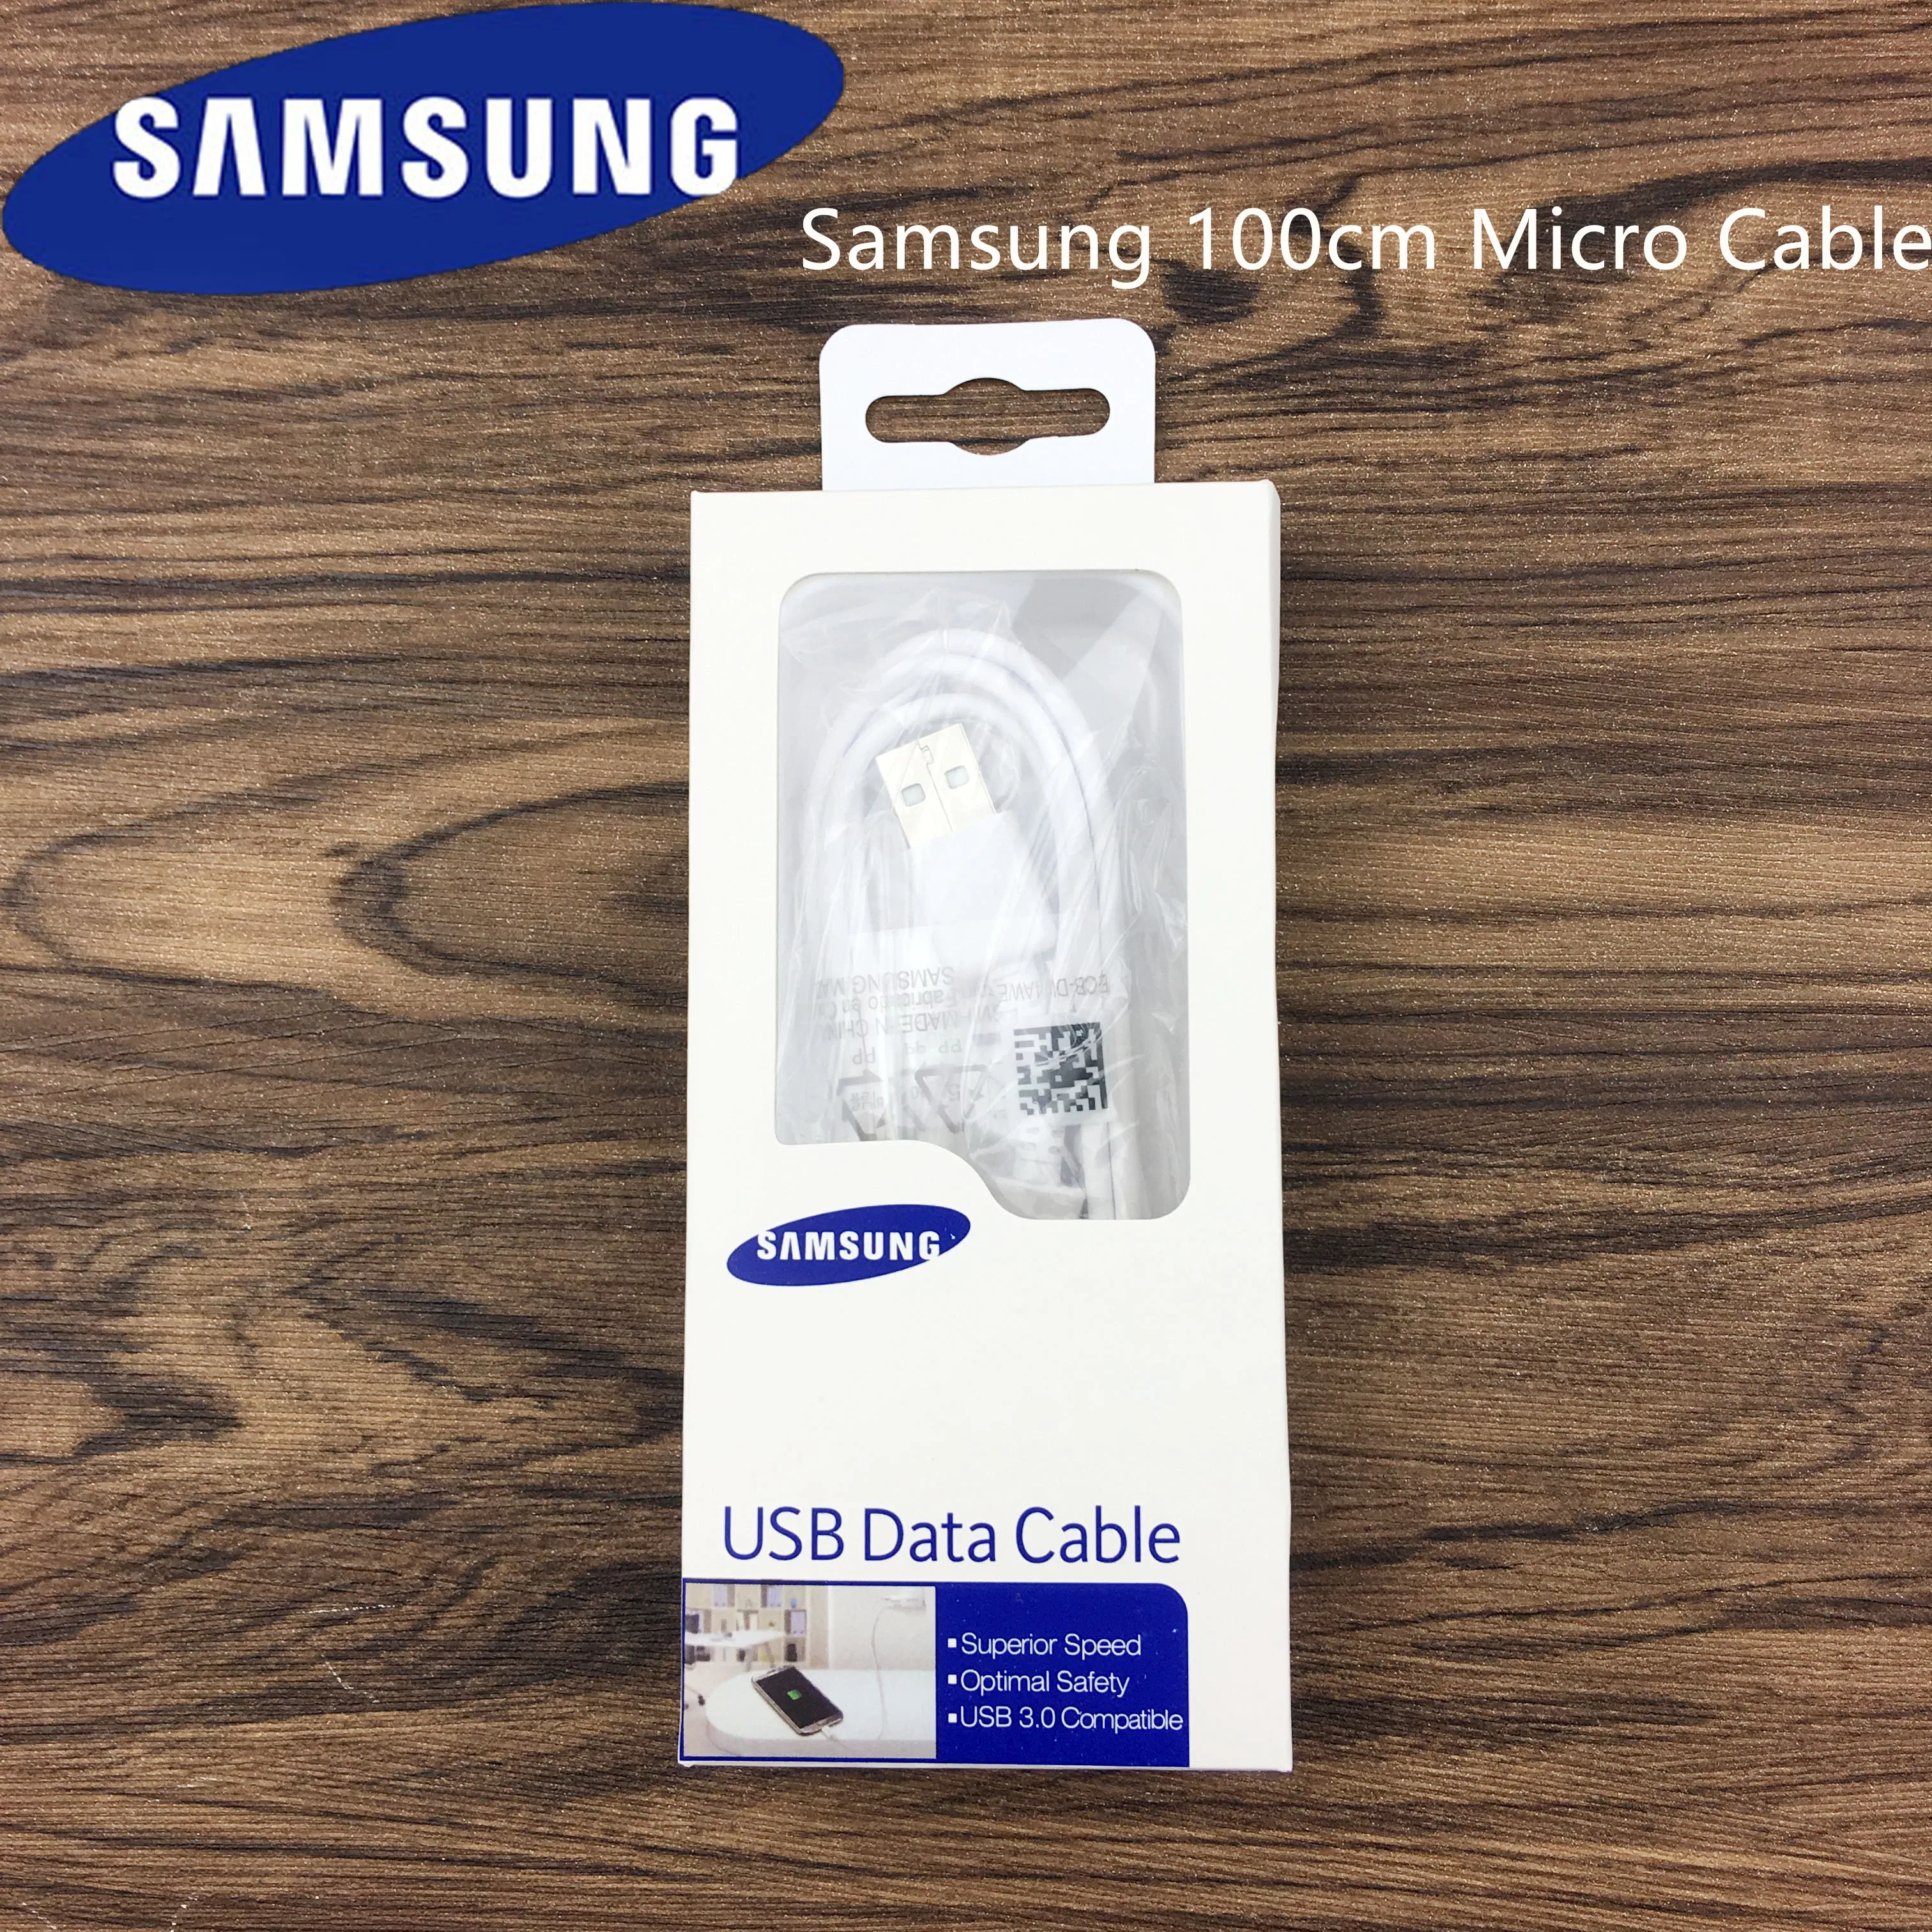 

Original Samsung Galaxy Fast Charger 100cm Micro Cable for Galaxy a8 a6 a5 s6 s7 j3 j5 j7 2017 edge s4 Galaxy A9 Star Lite